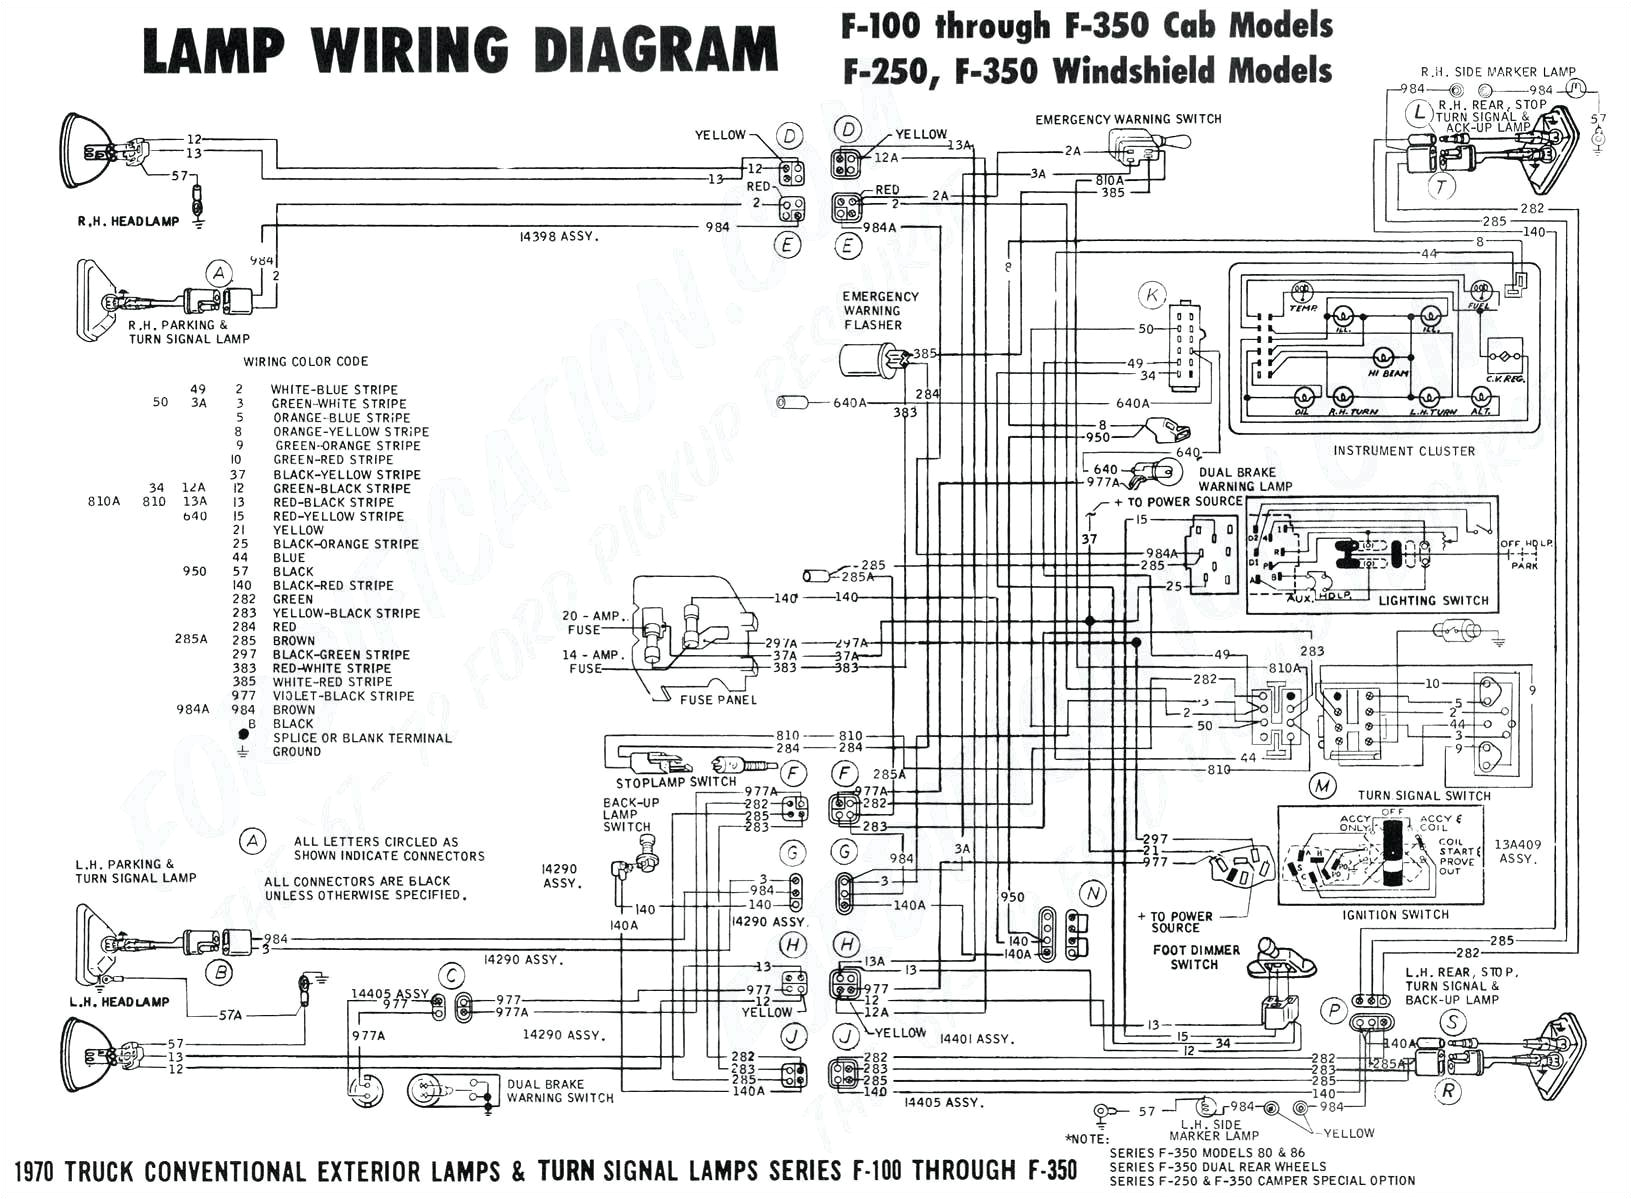 2003 jeep liberty fuse box diagram image details wiring diagram data